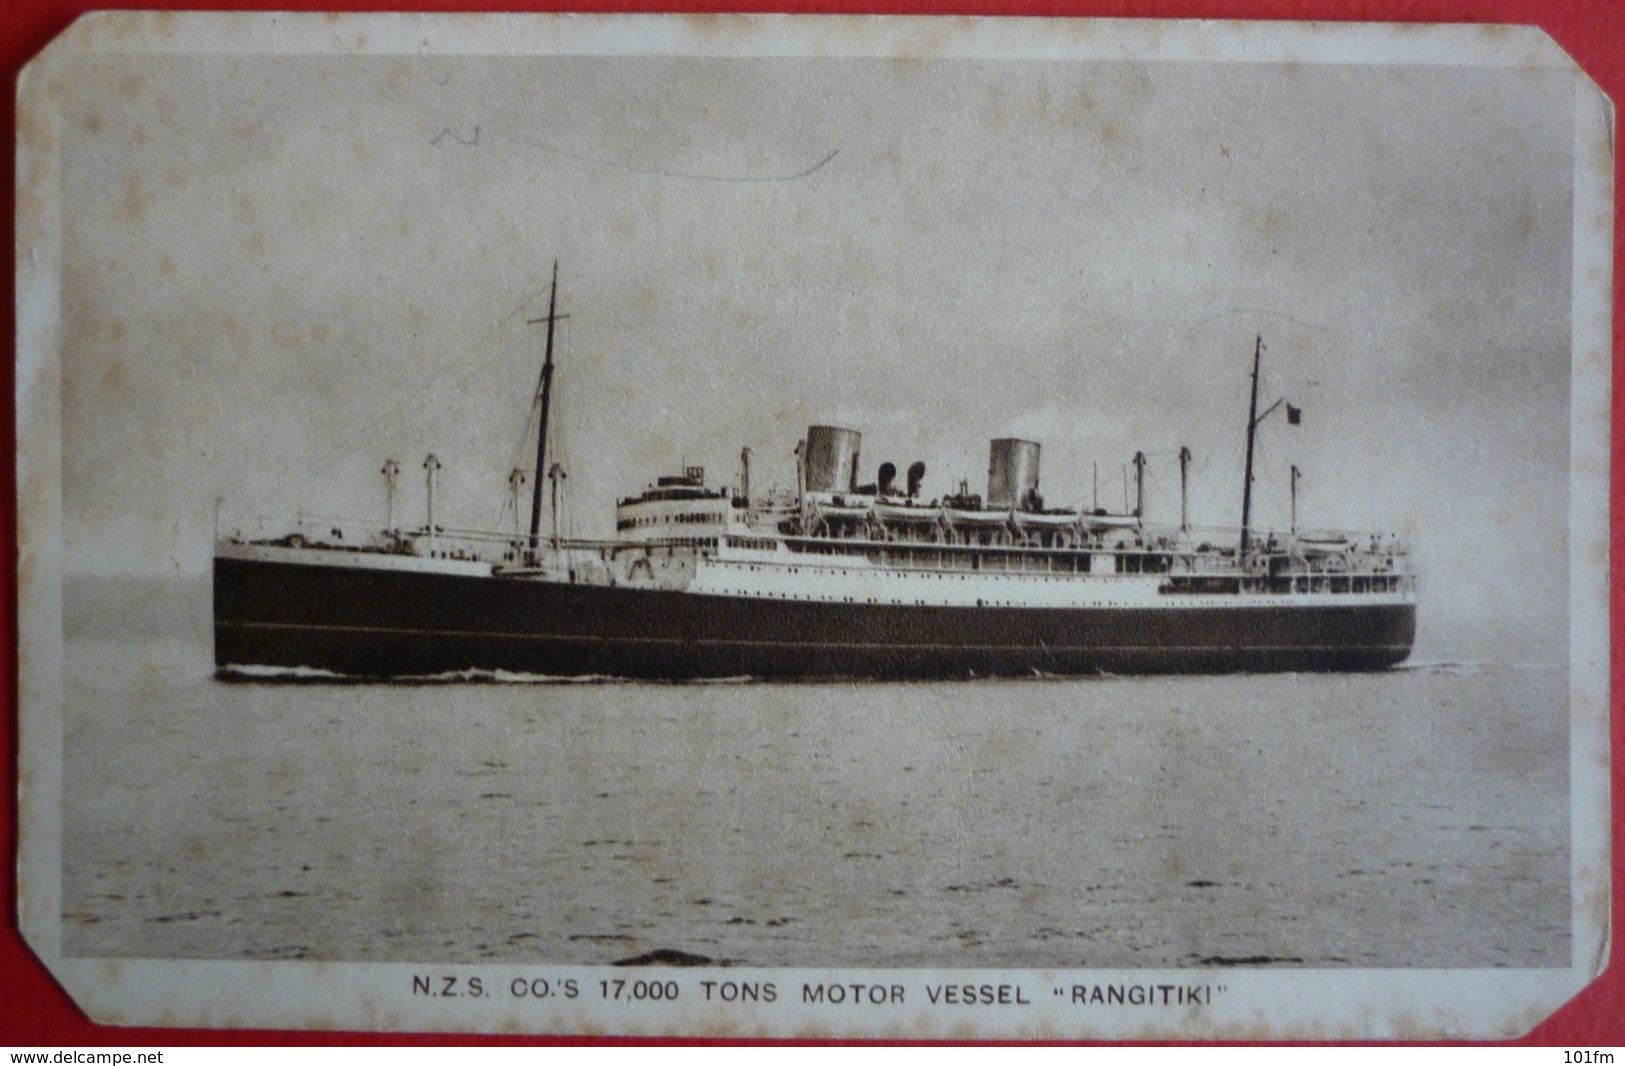 SS.RANGITIKI - NEW ZEALAND SG. CO. - Dampfer